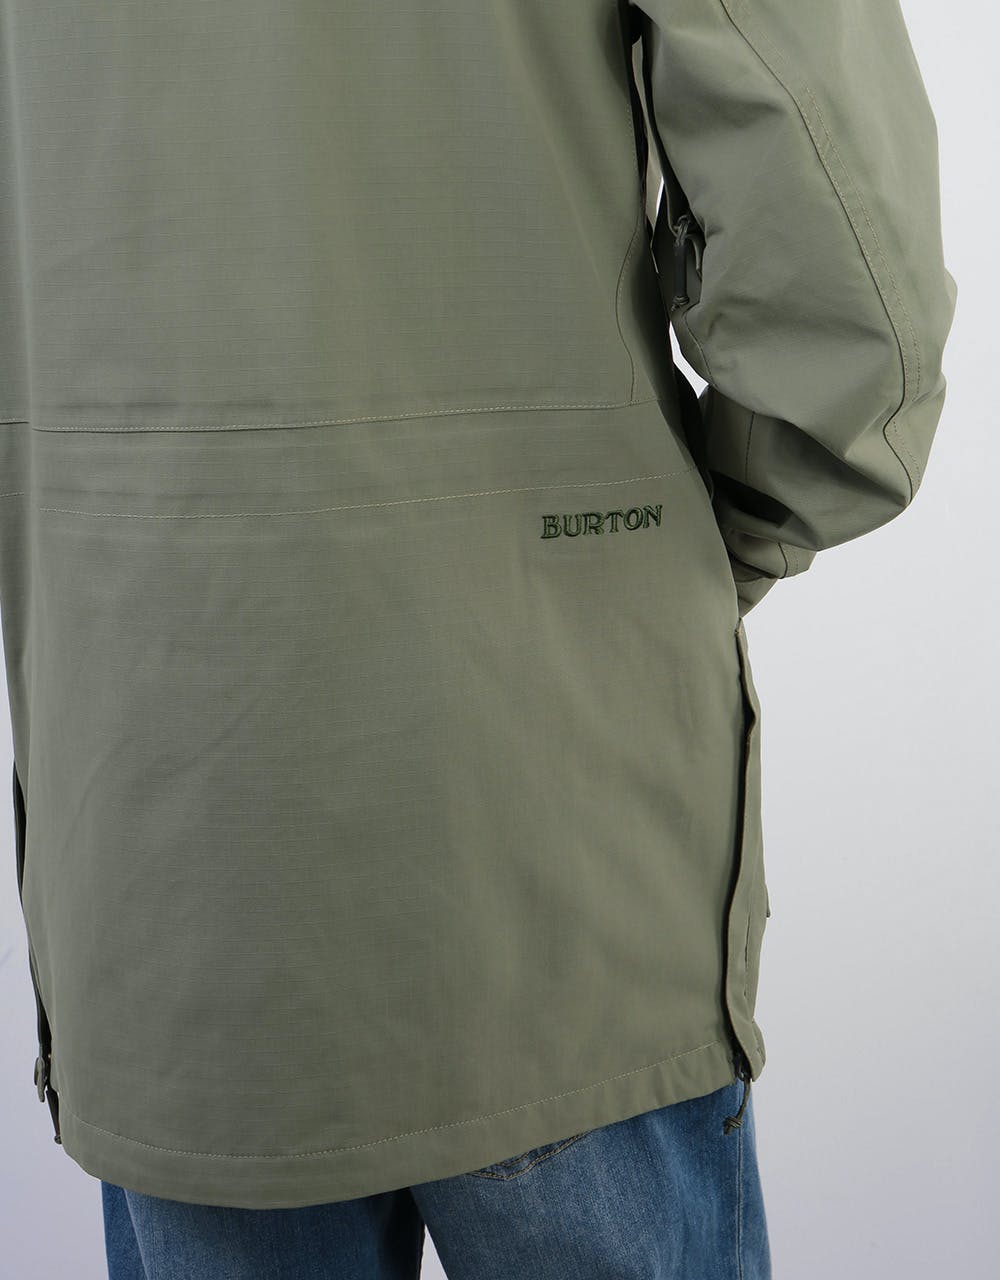 Burton Paddox Snowboard Jacket - Clover